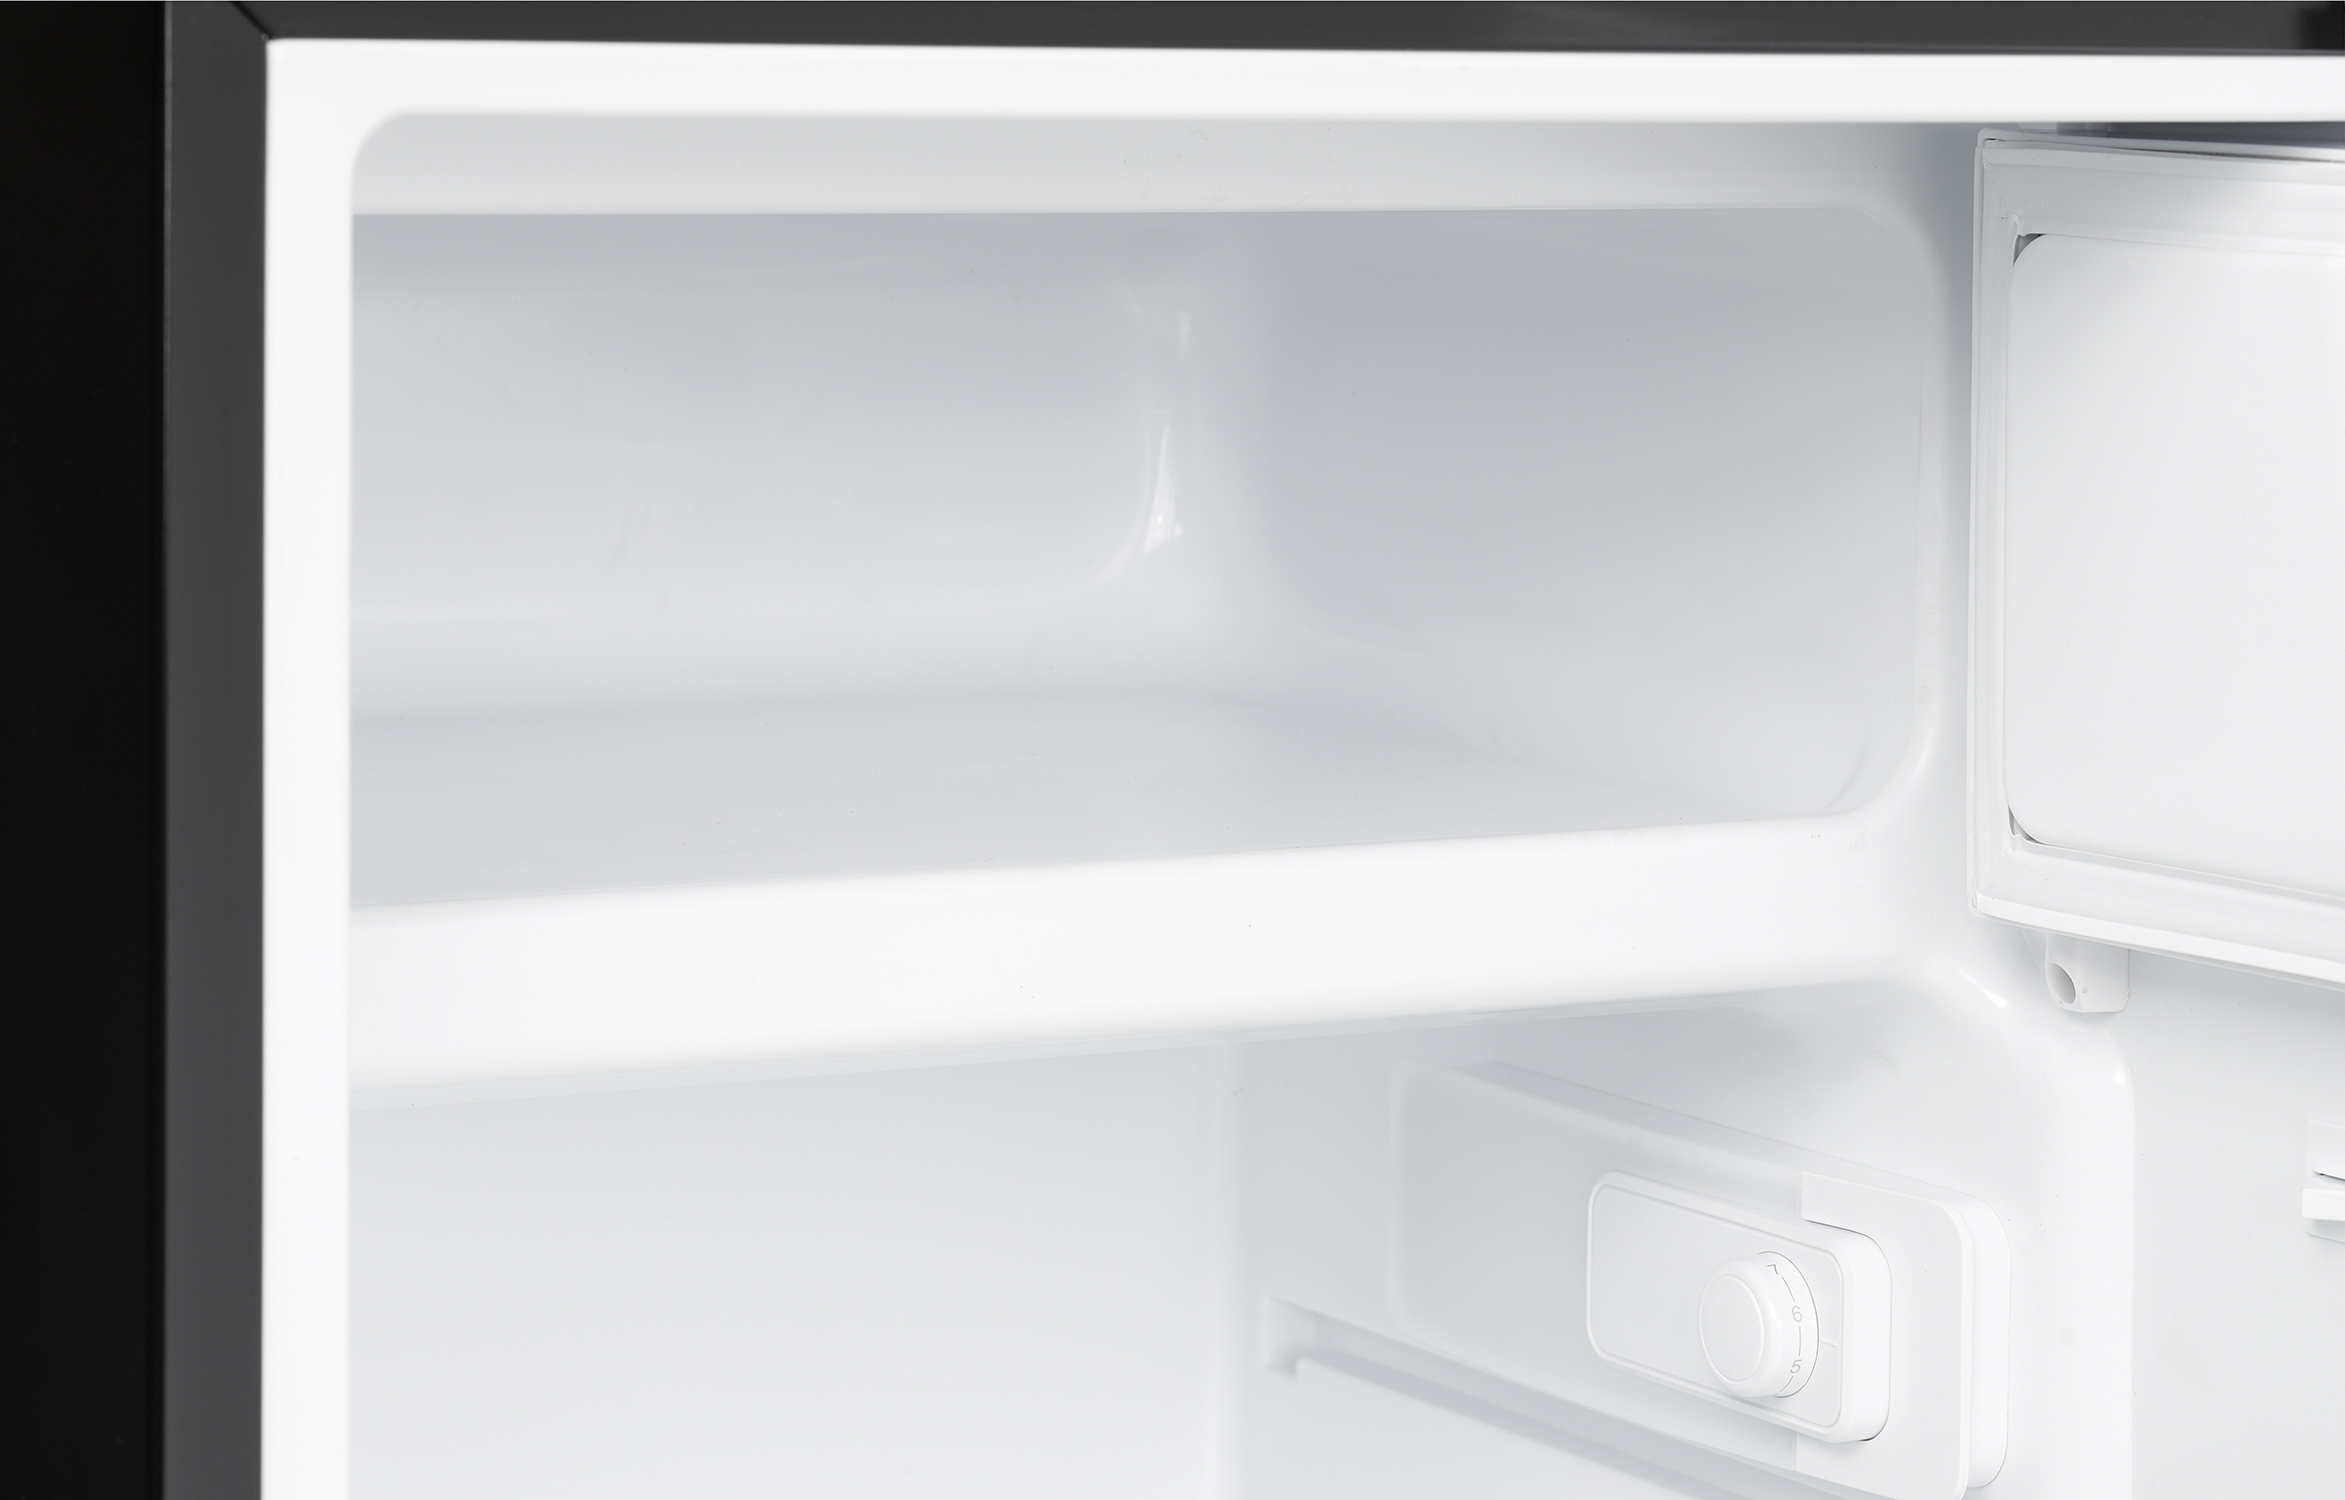 Danby 4.5 cu. ft. Compact Refrigerator with True Freezer